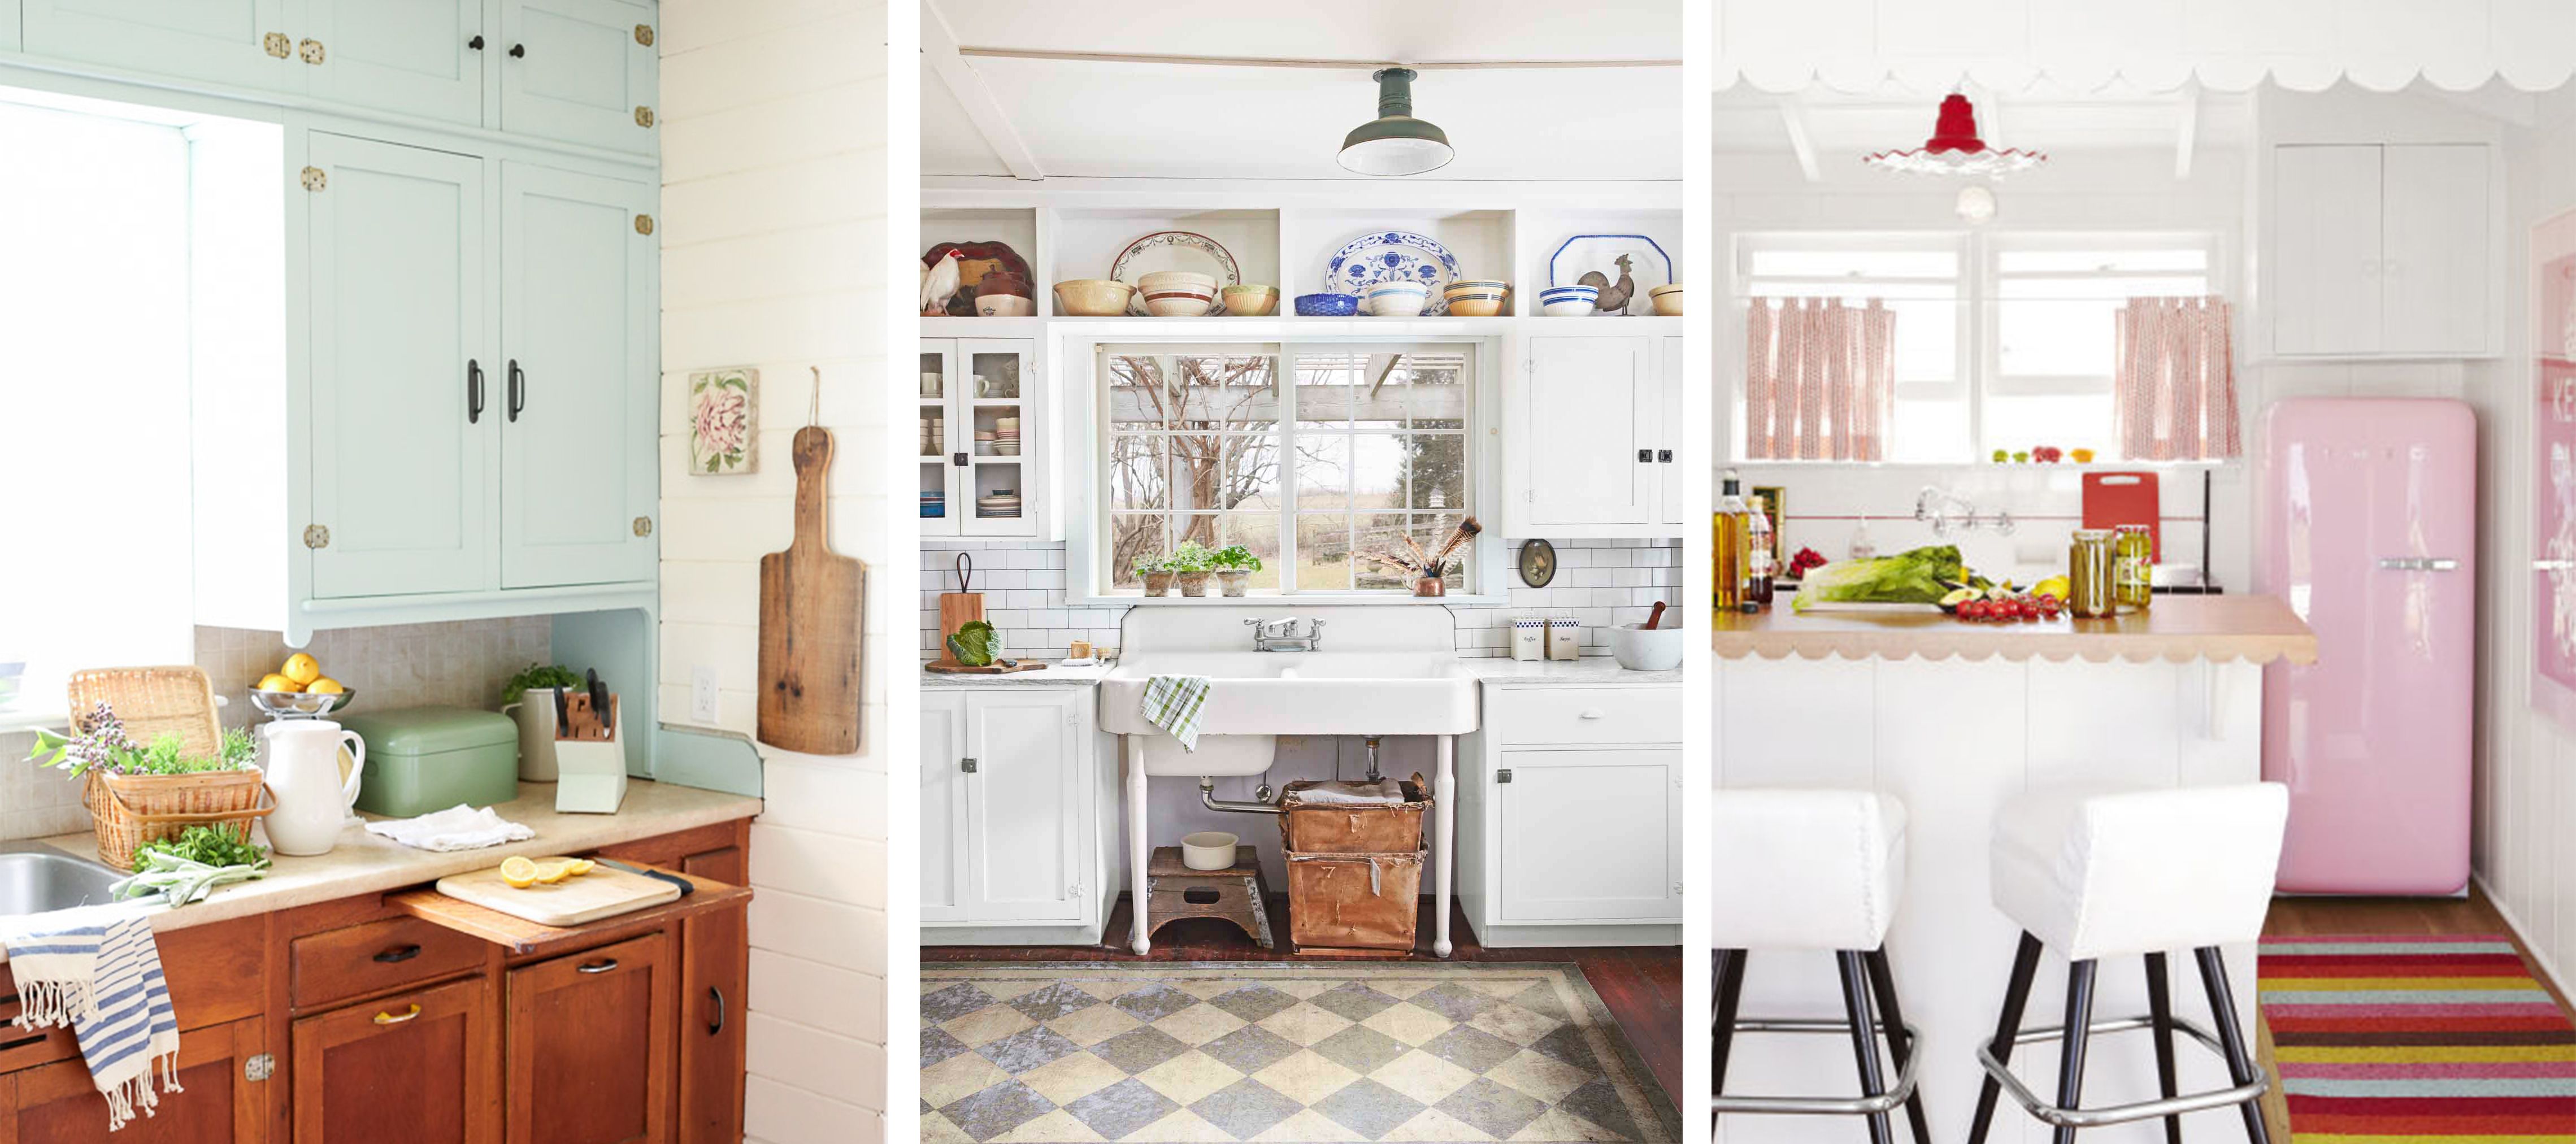 20 vintage kitchen decorating ideas - design inspiration for retro